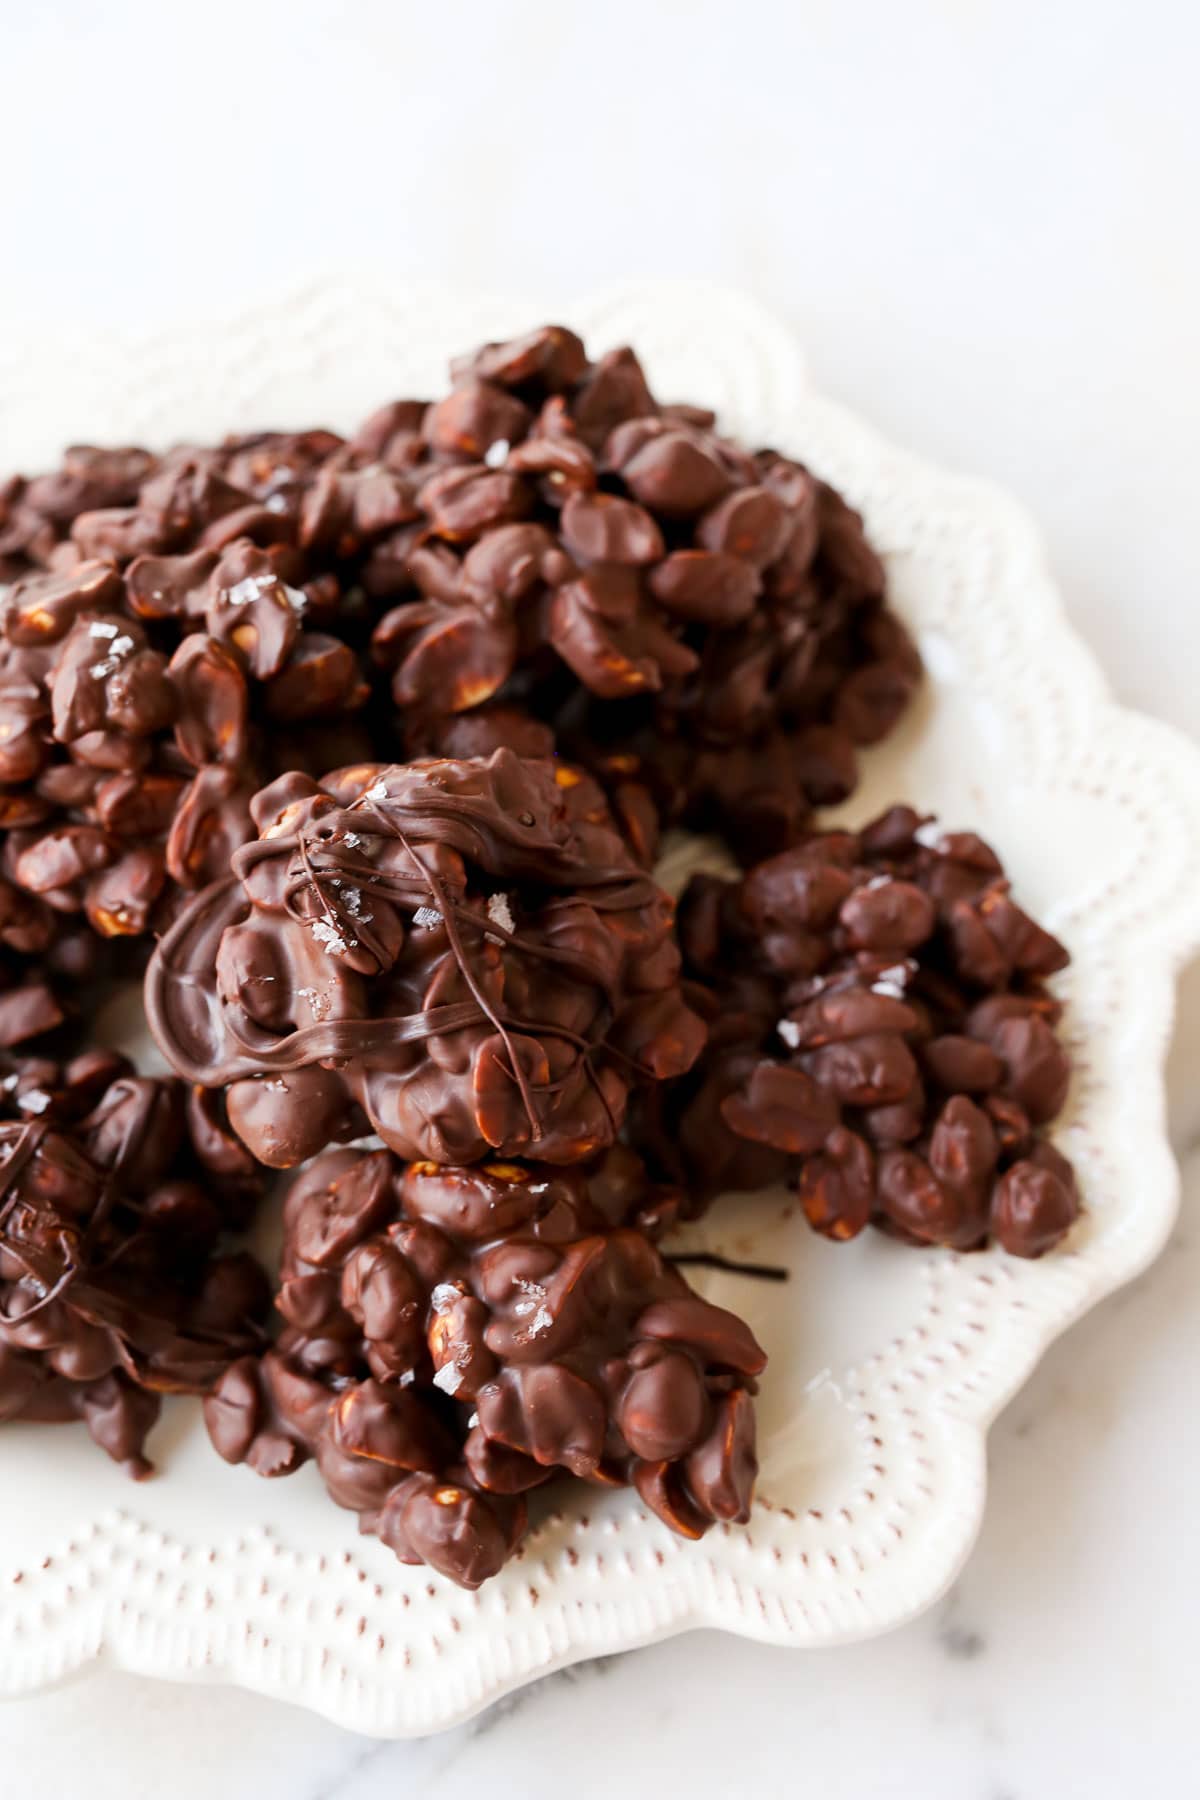 Chocolate Peanut Clusters close up image.